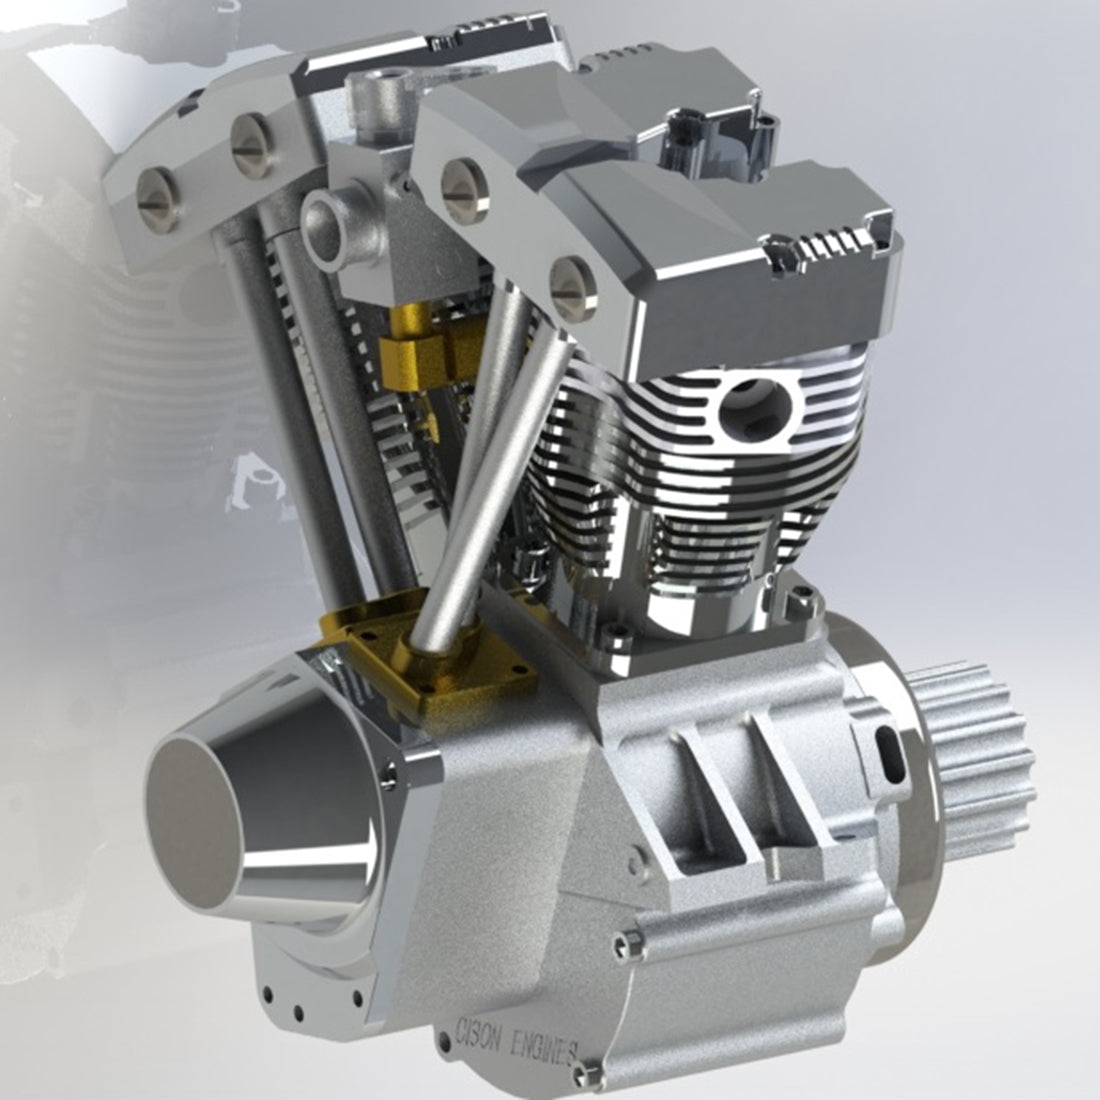 CISON FG-VT157 15.7cc Miniature V-Twin Motorcycle Engine OHV 4 Stroke Air-cooled Gasoline Engine Model Pre-order - stirlingkit